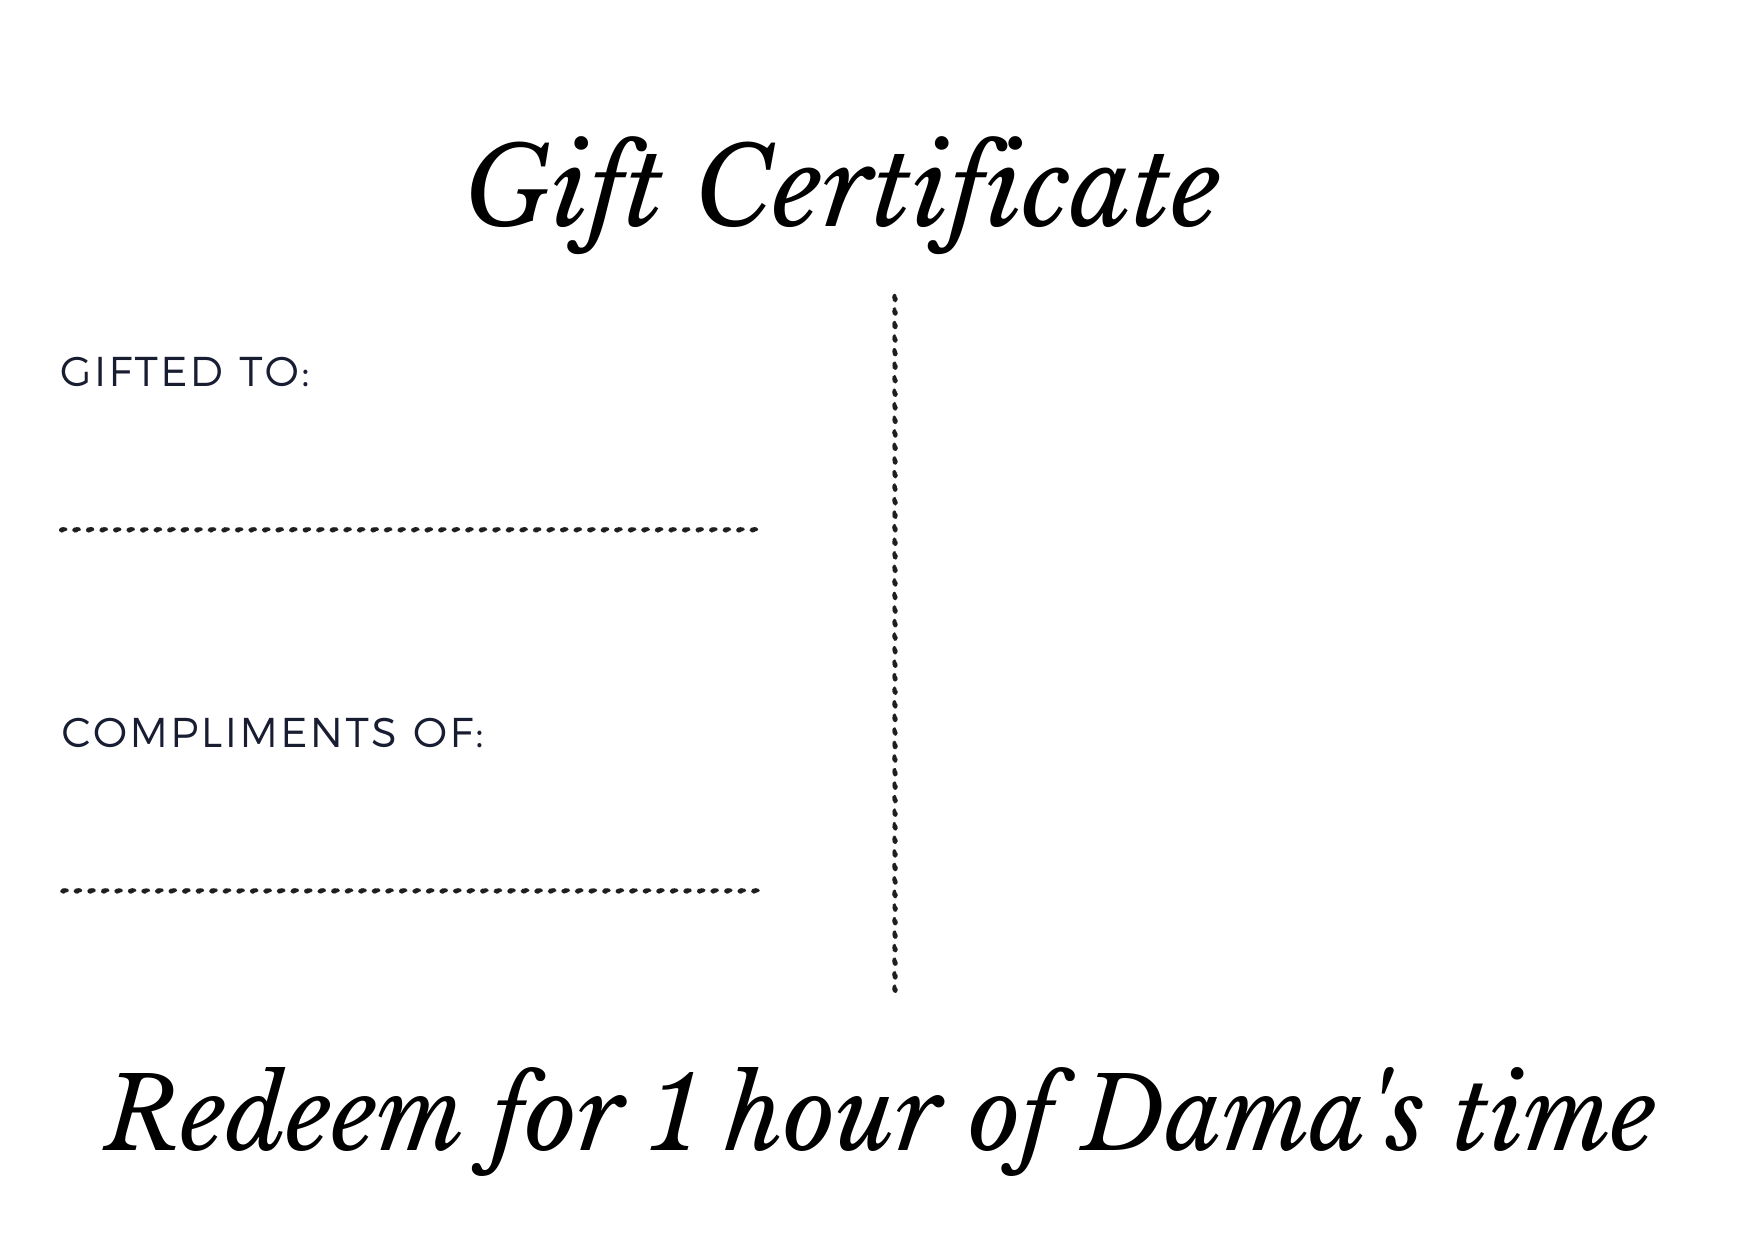 Gift Certificate, Dama Avery